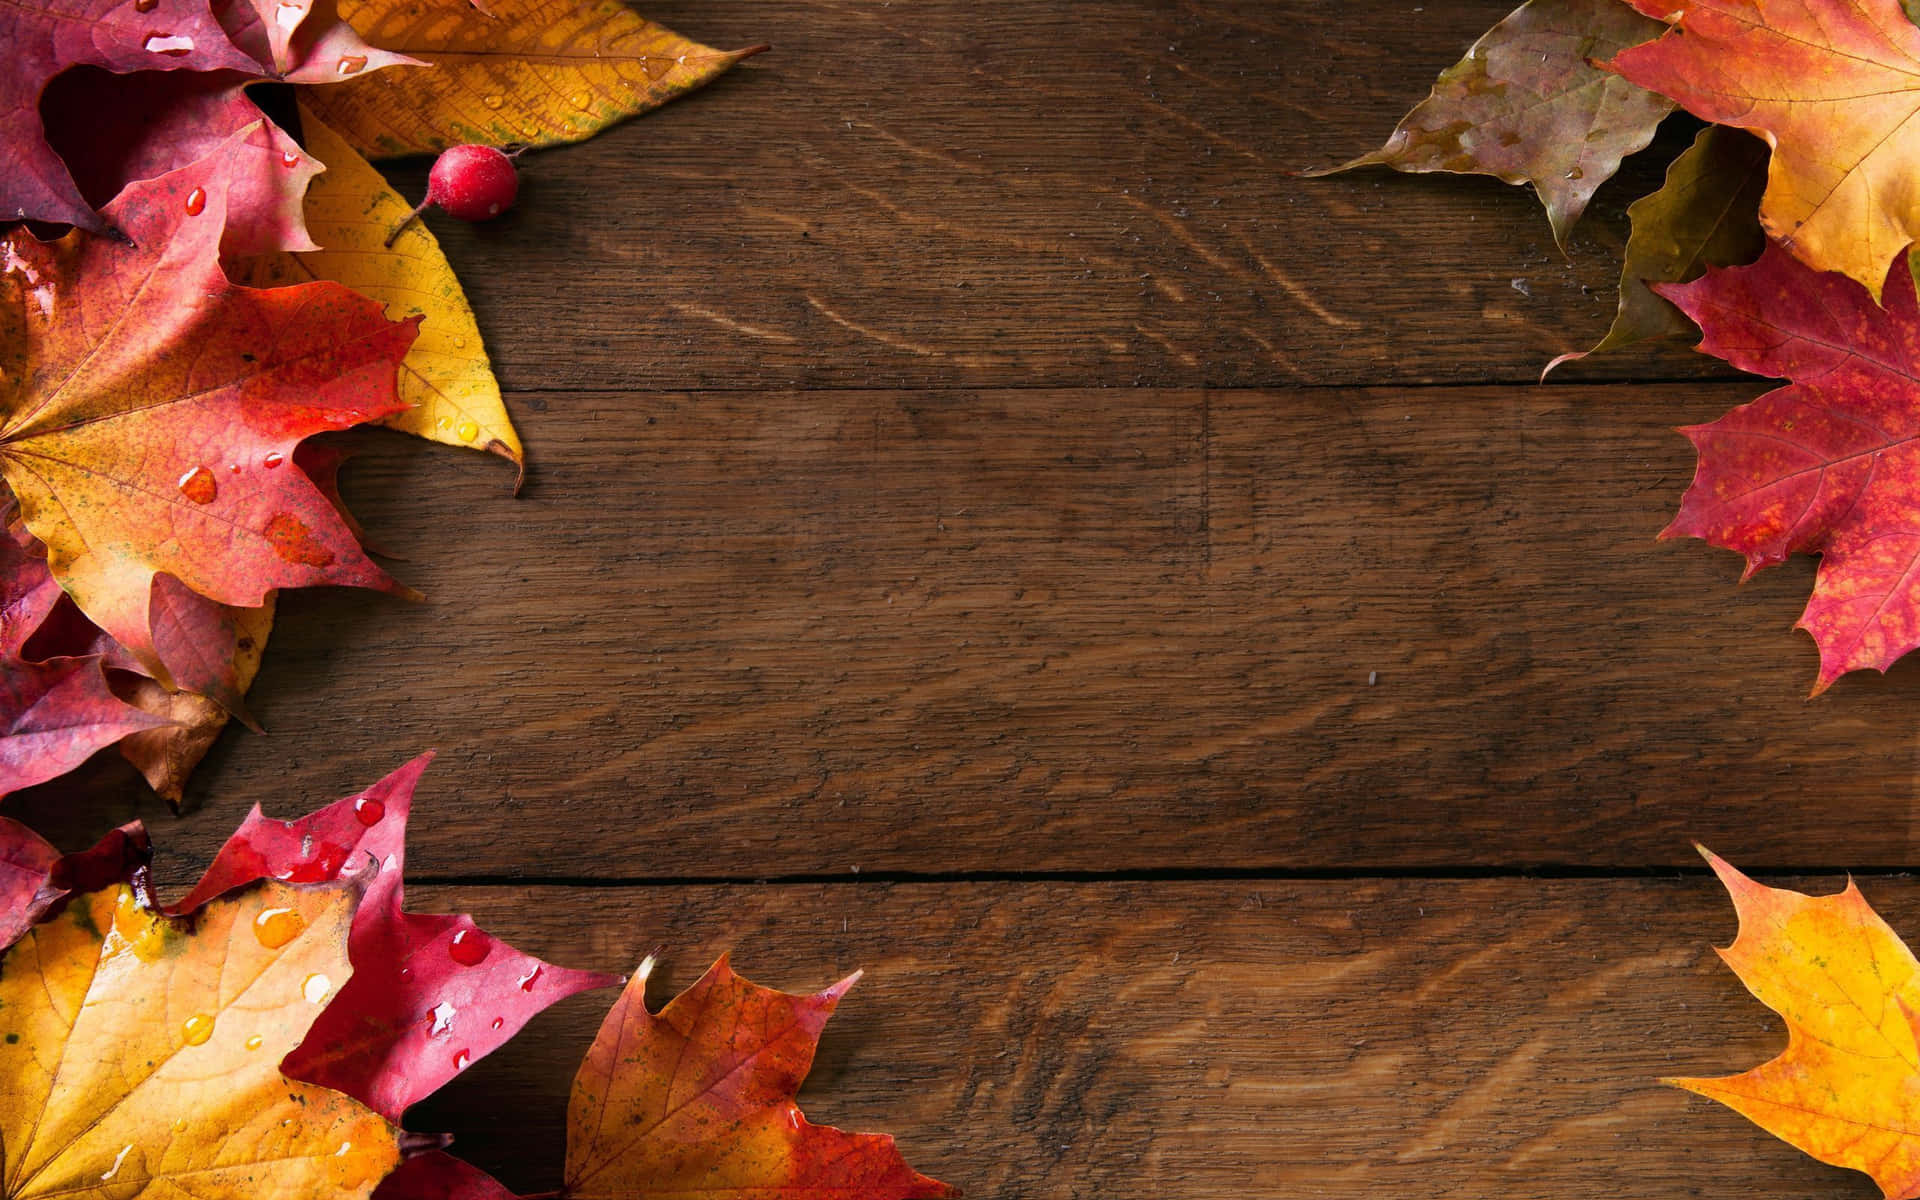 Dark Wood Deck With Maple Leaves Fall Autumn Desktop Wallpaper